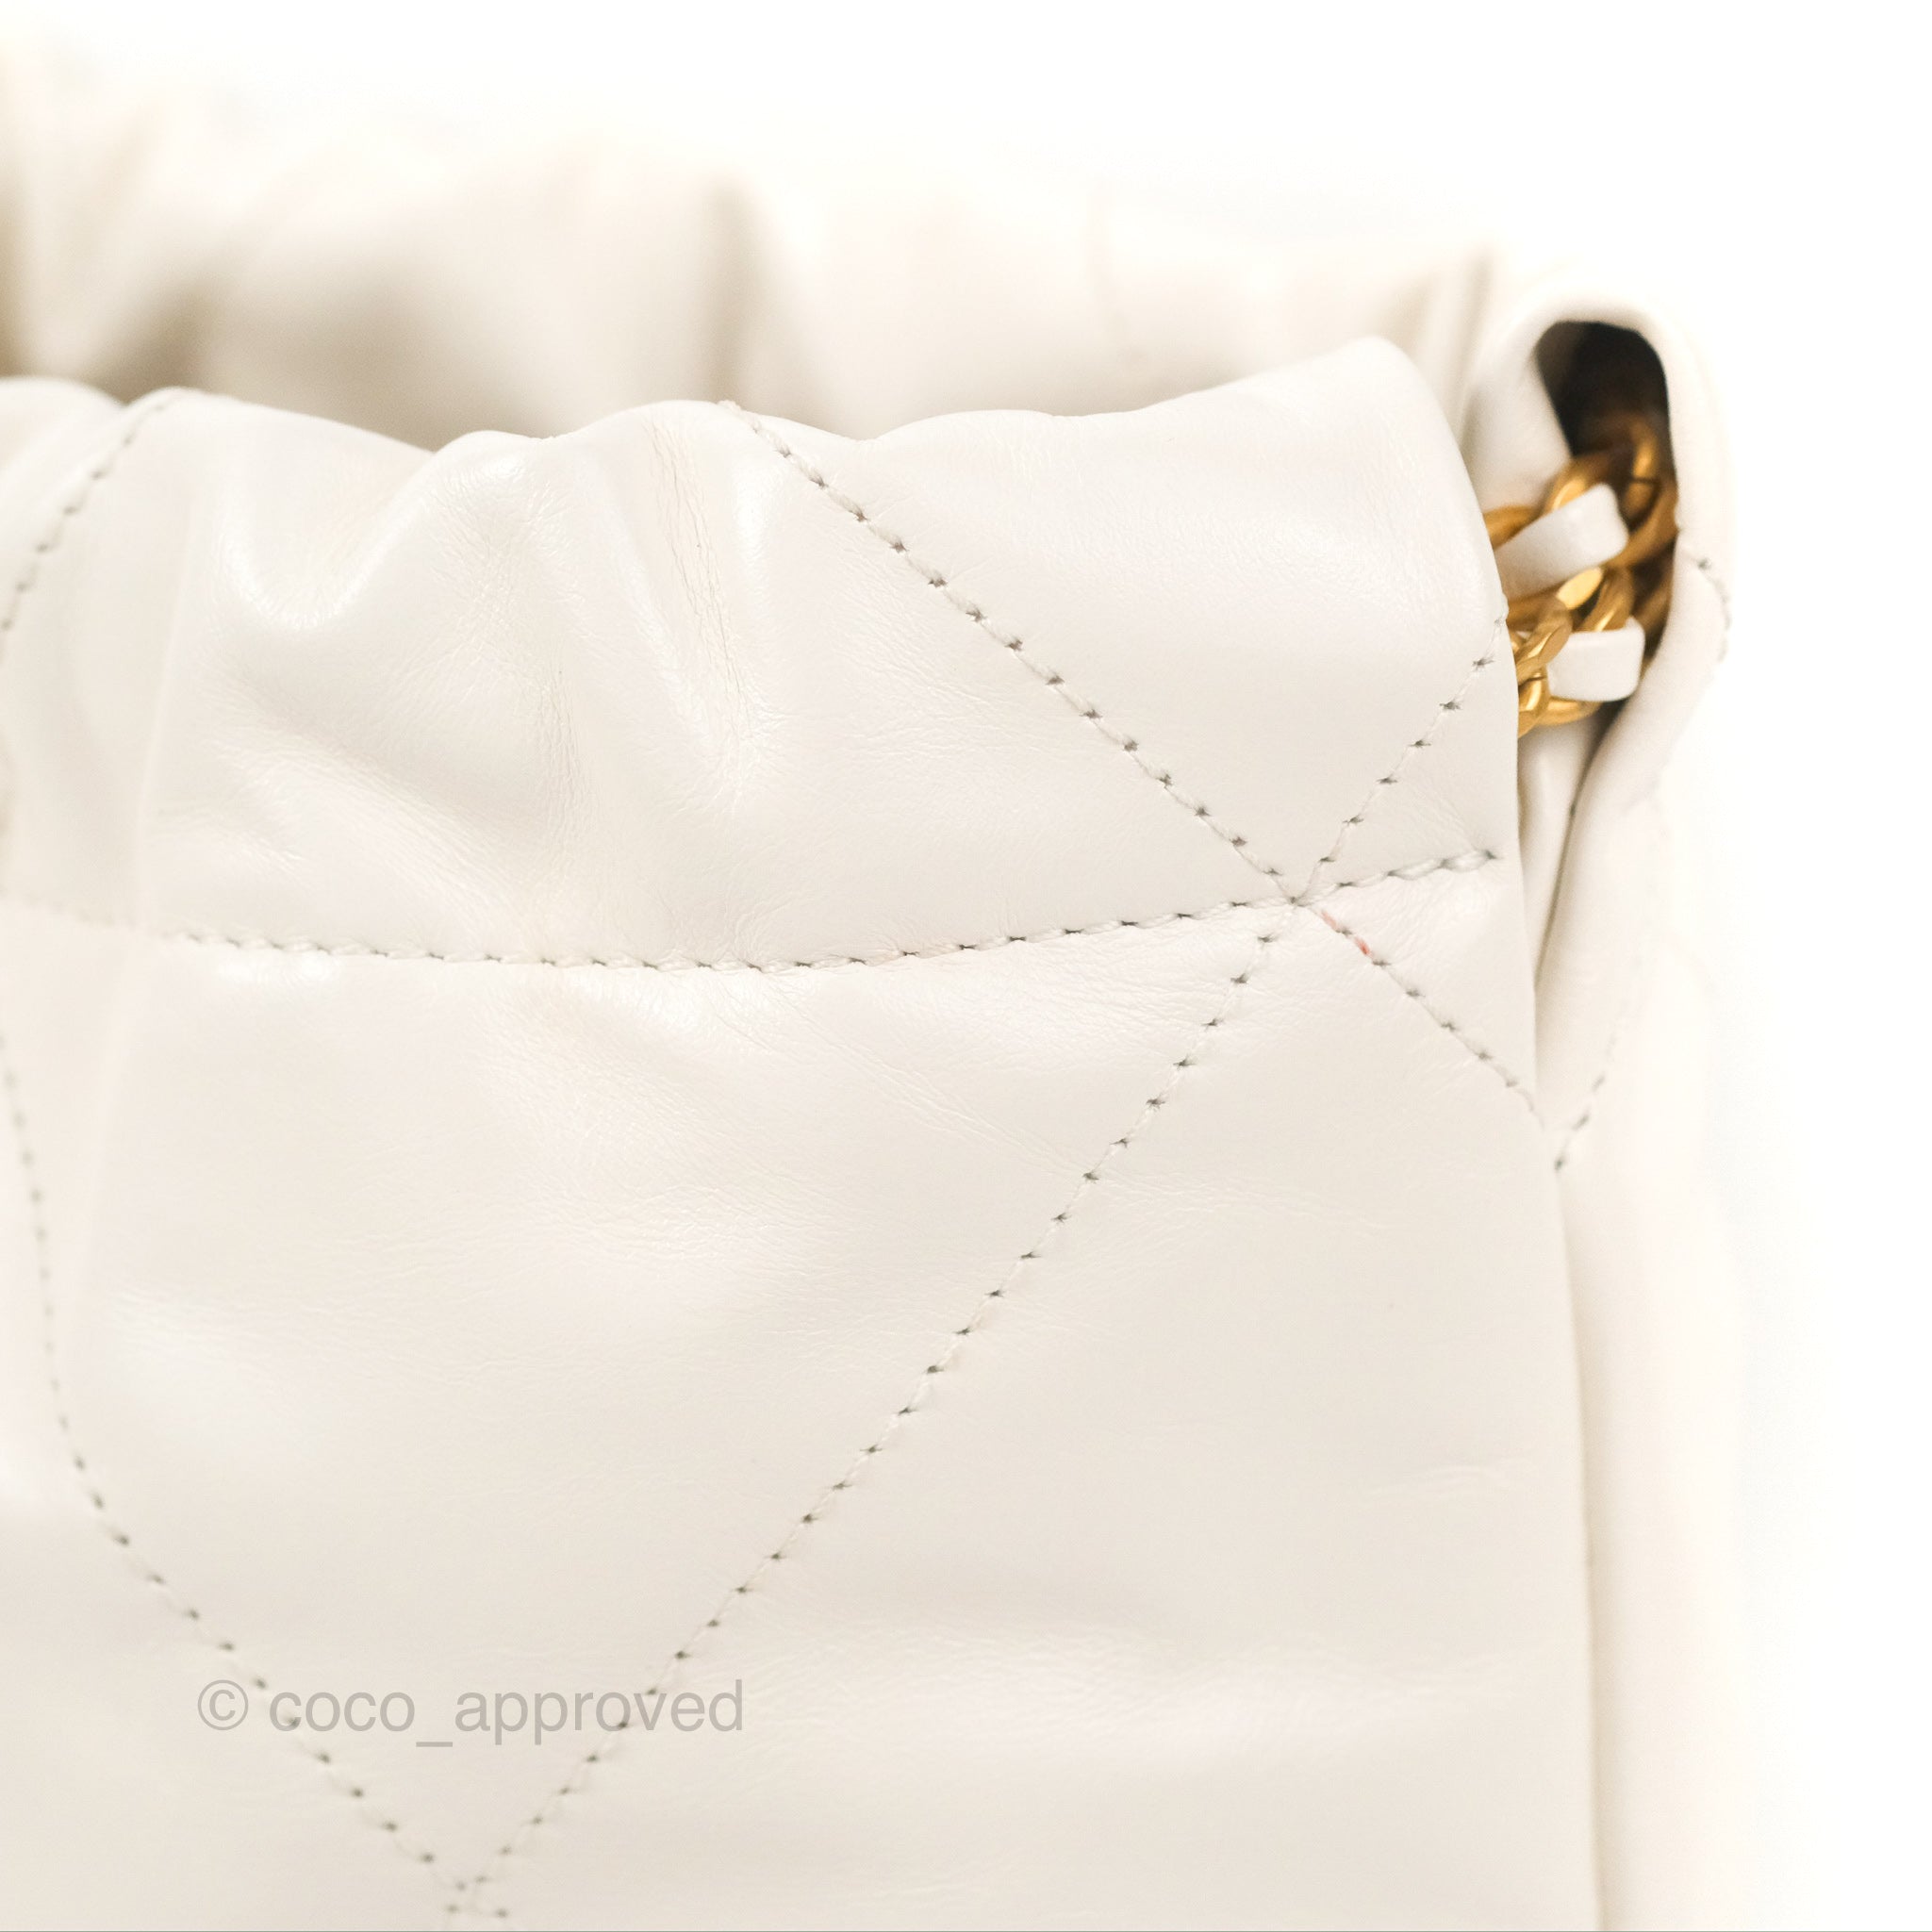 Chanel 22 Small Handbag White - Kaialux